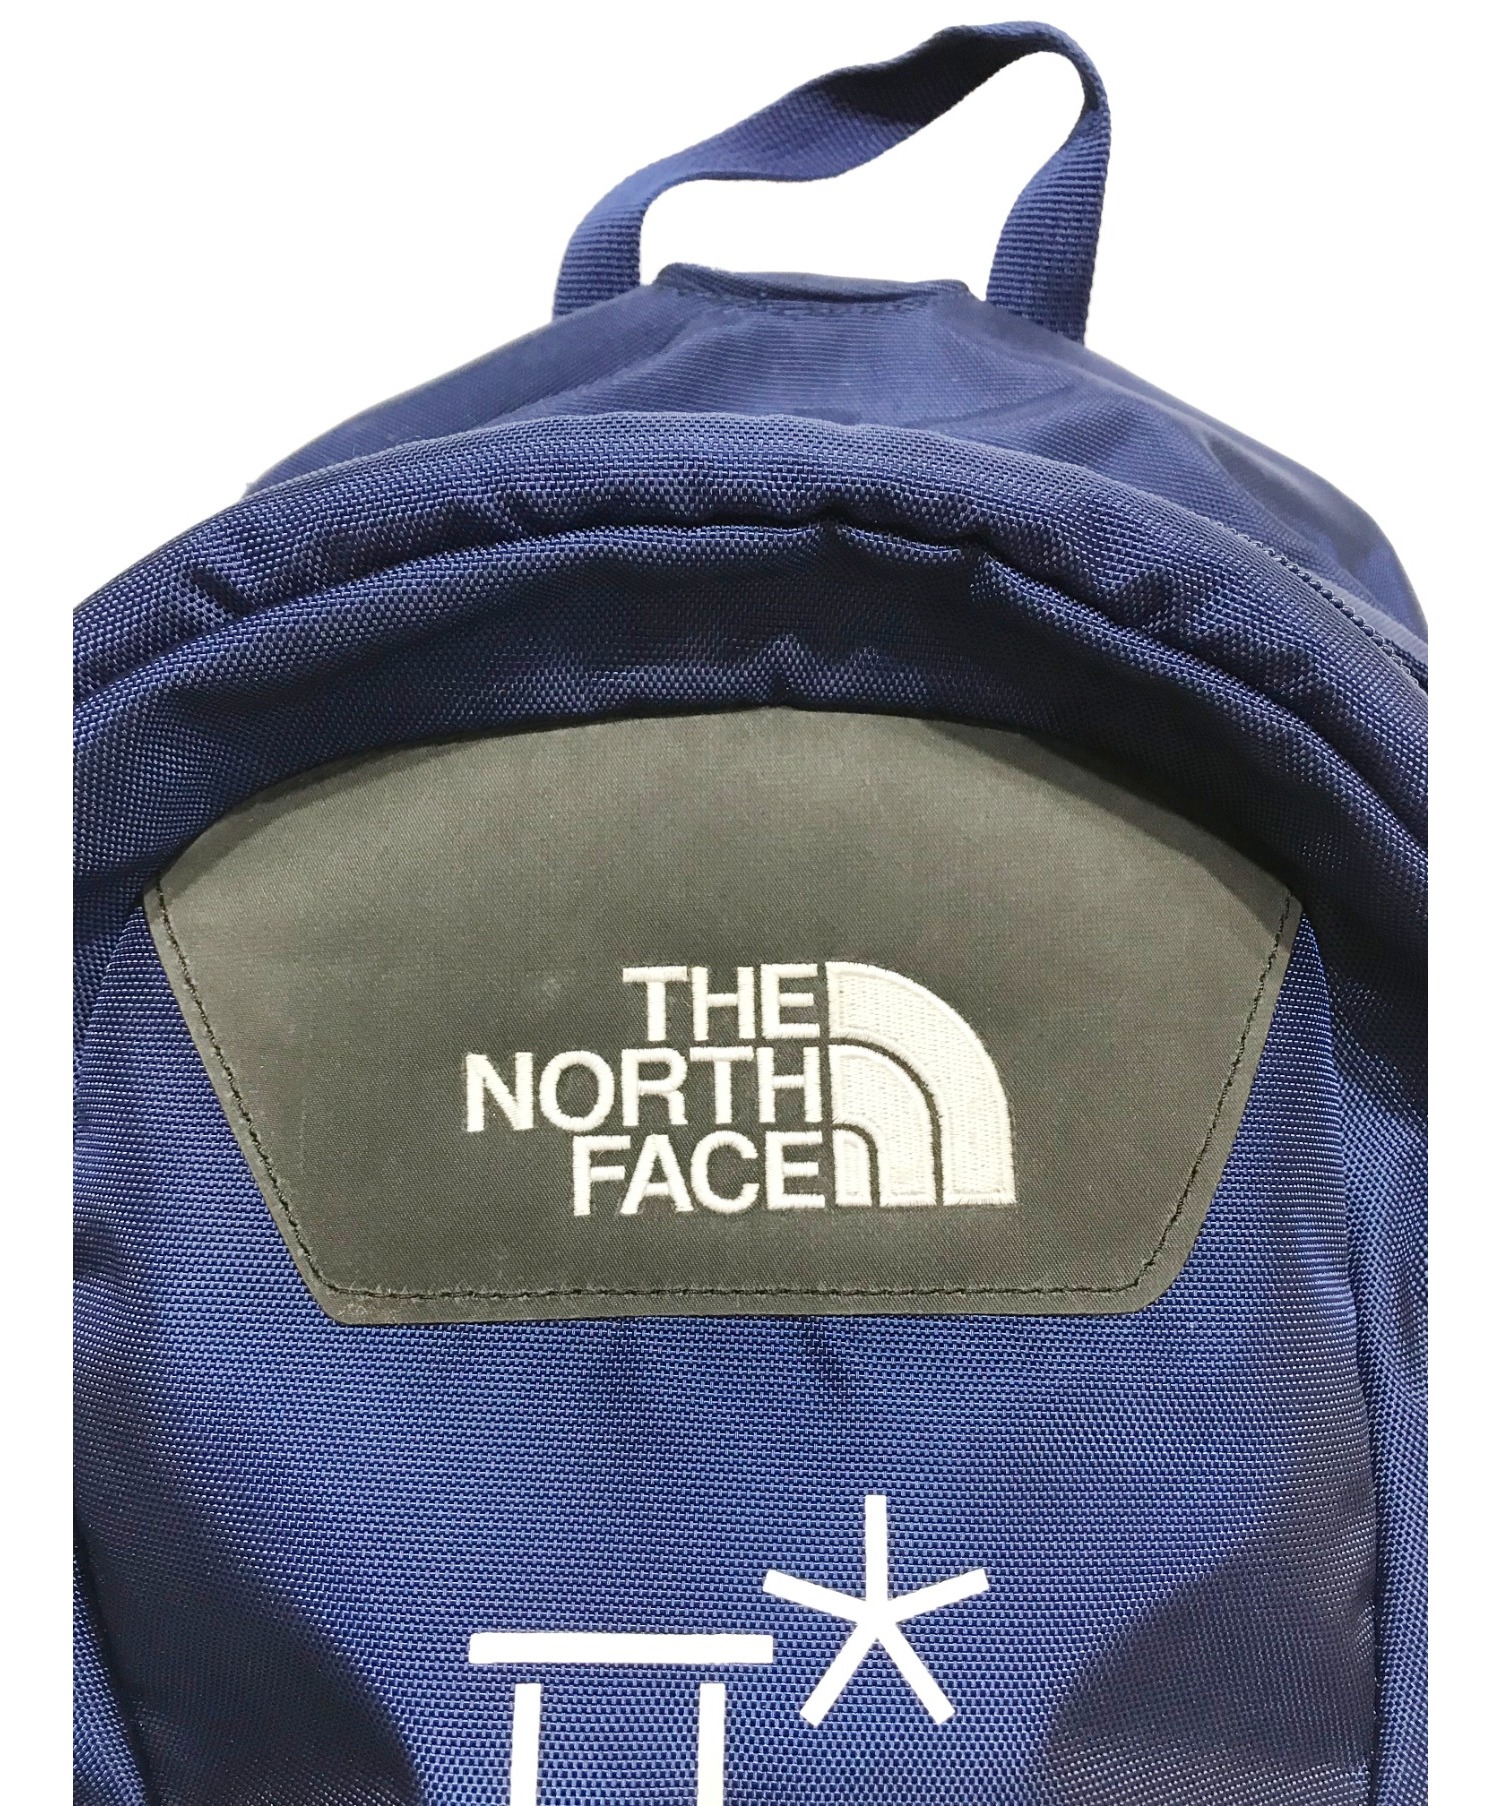 THE NORTH FACE (ザ ノース フェイス) ピョンチャンオリンピック限定バックパック ブルー